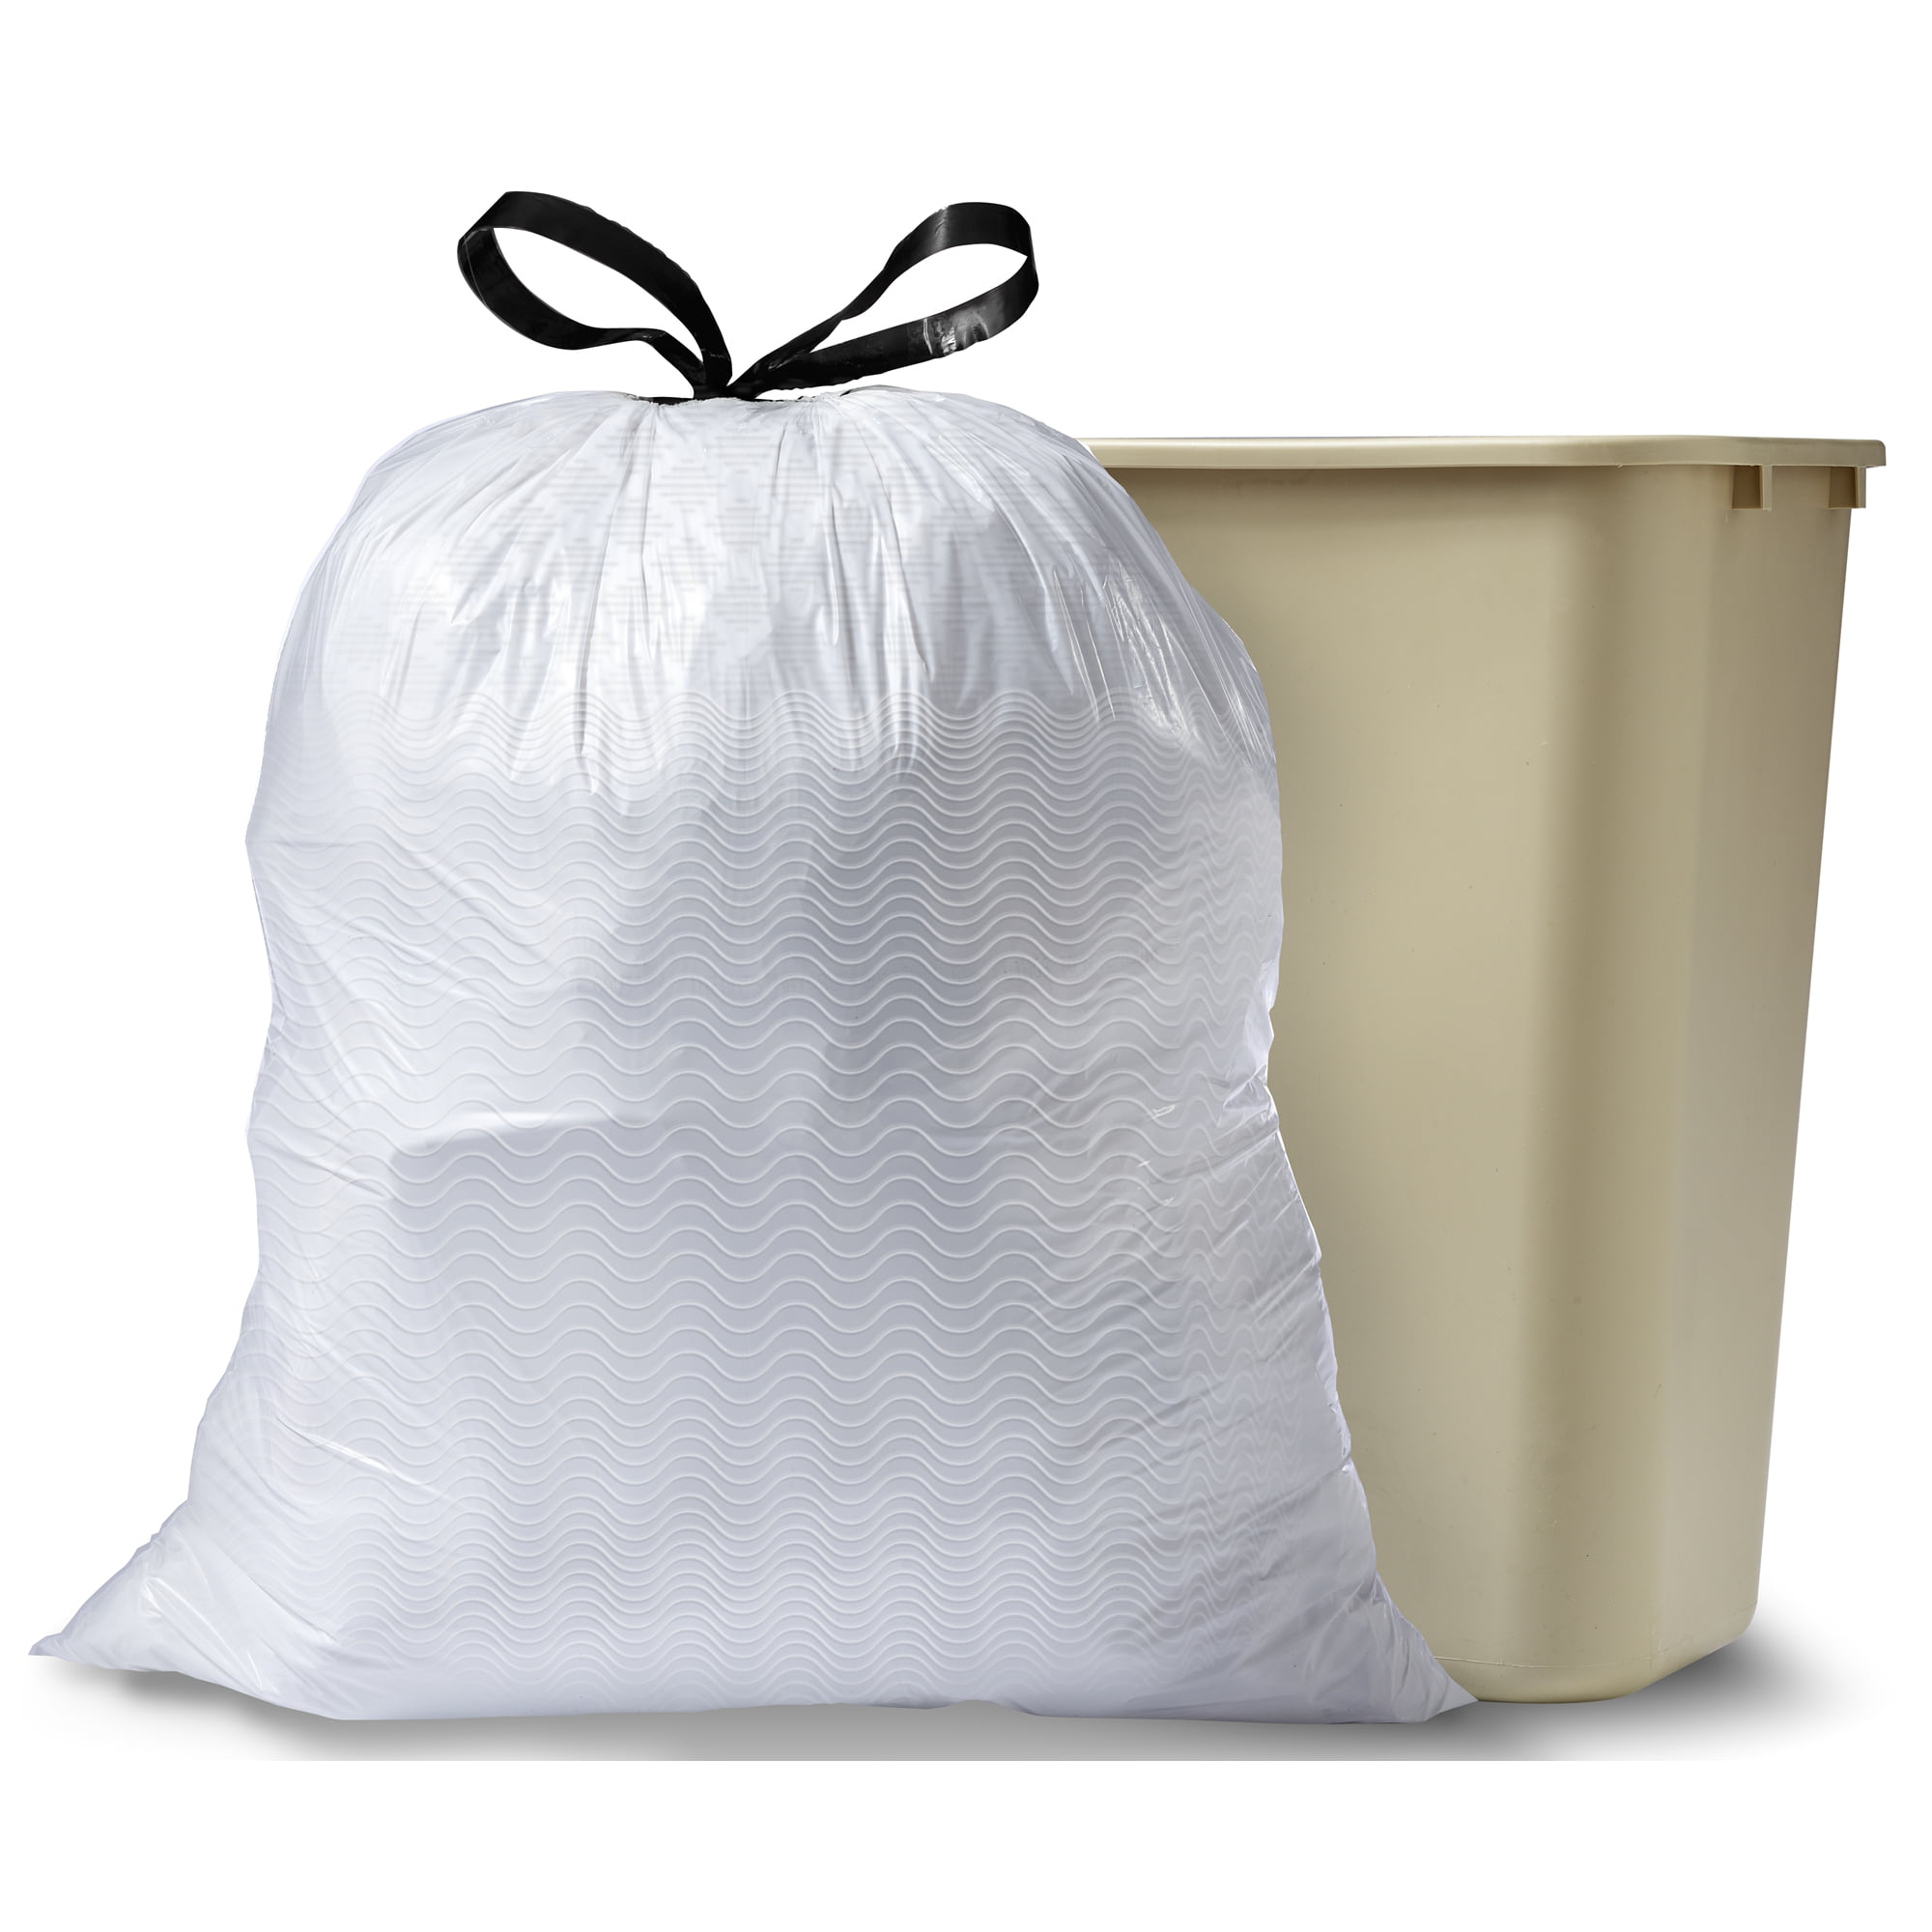 Hero Kitchen Trash Bags, 13 Gallon, 40 Bags (Lemon Scent), Odor Neutralizer, Flap Ties, Yellow/White